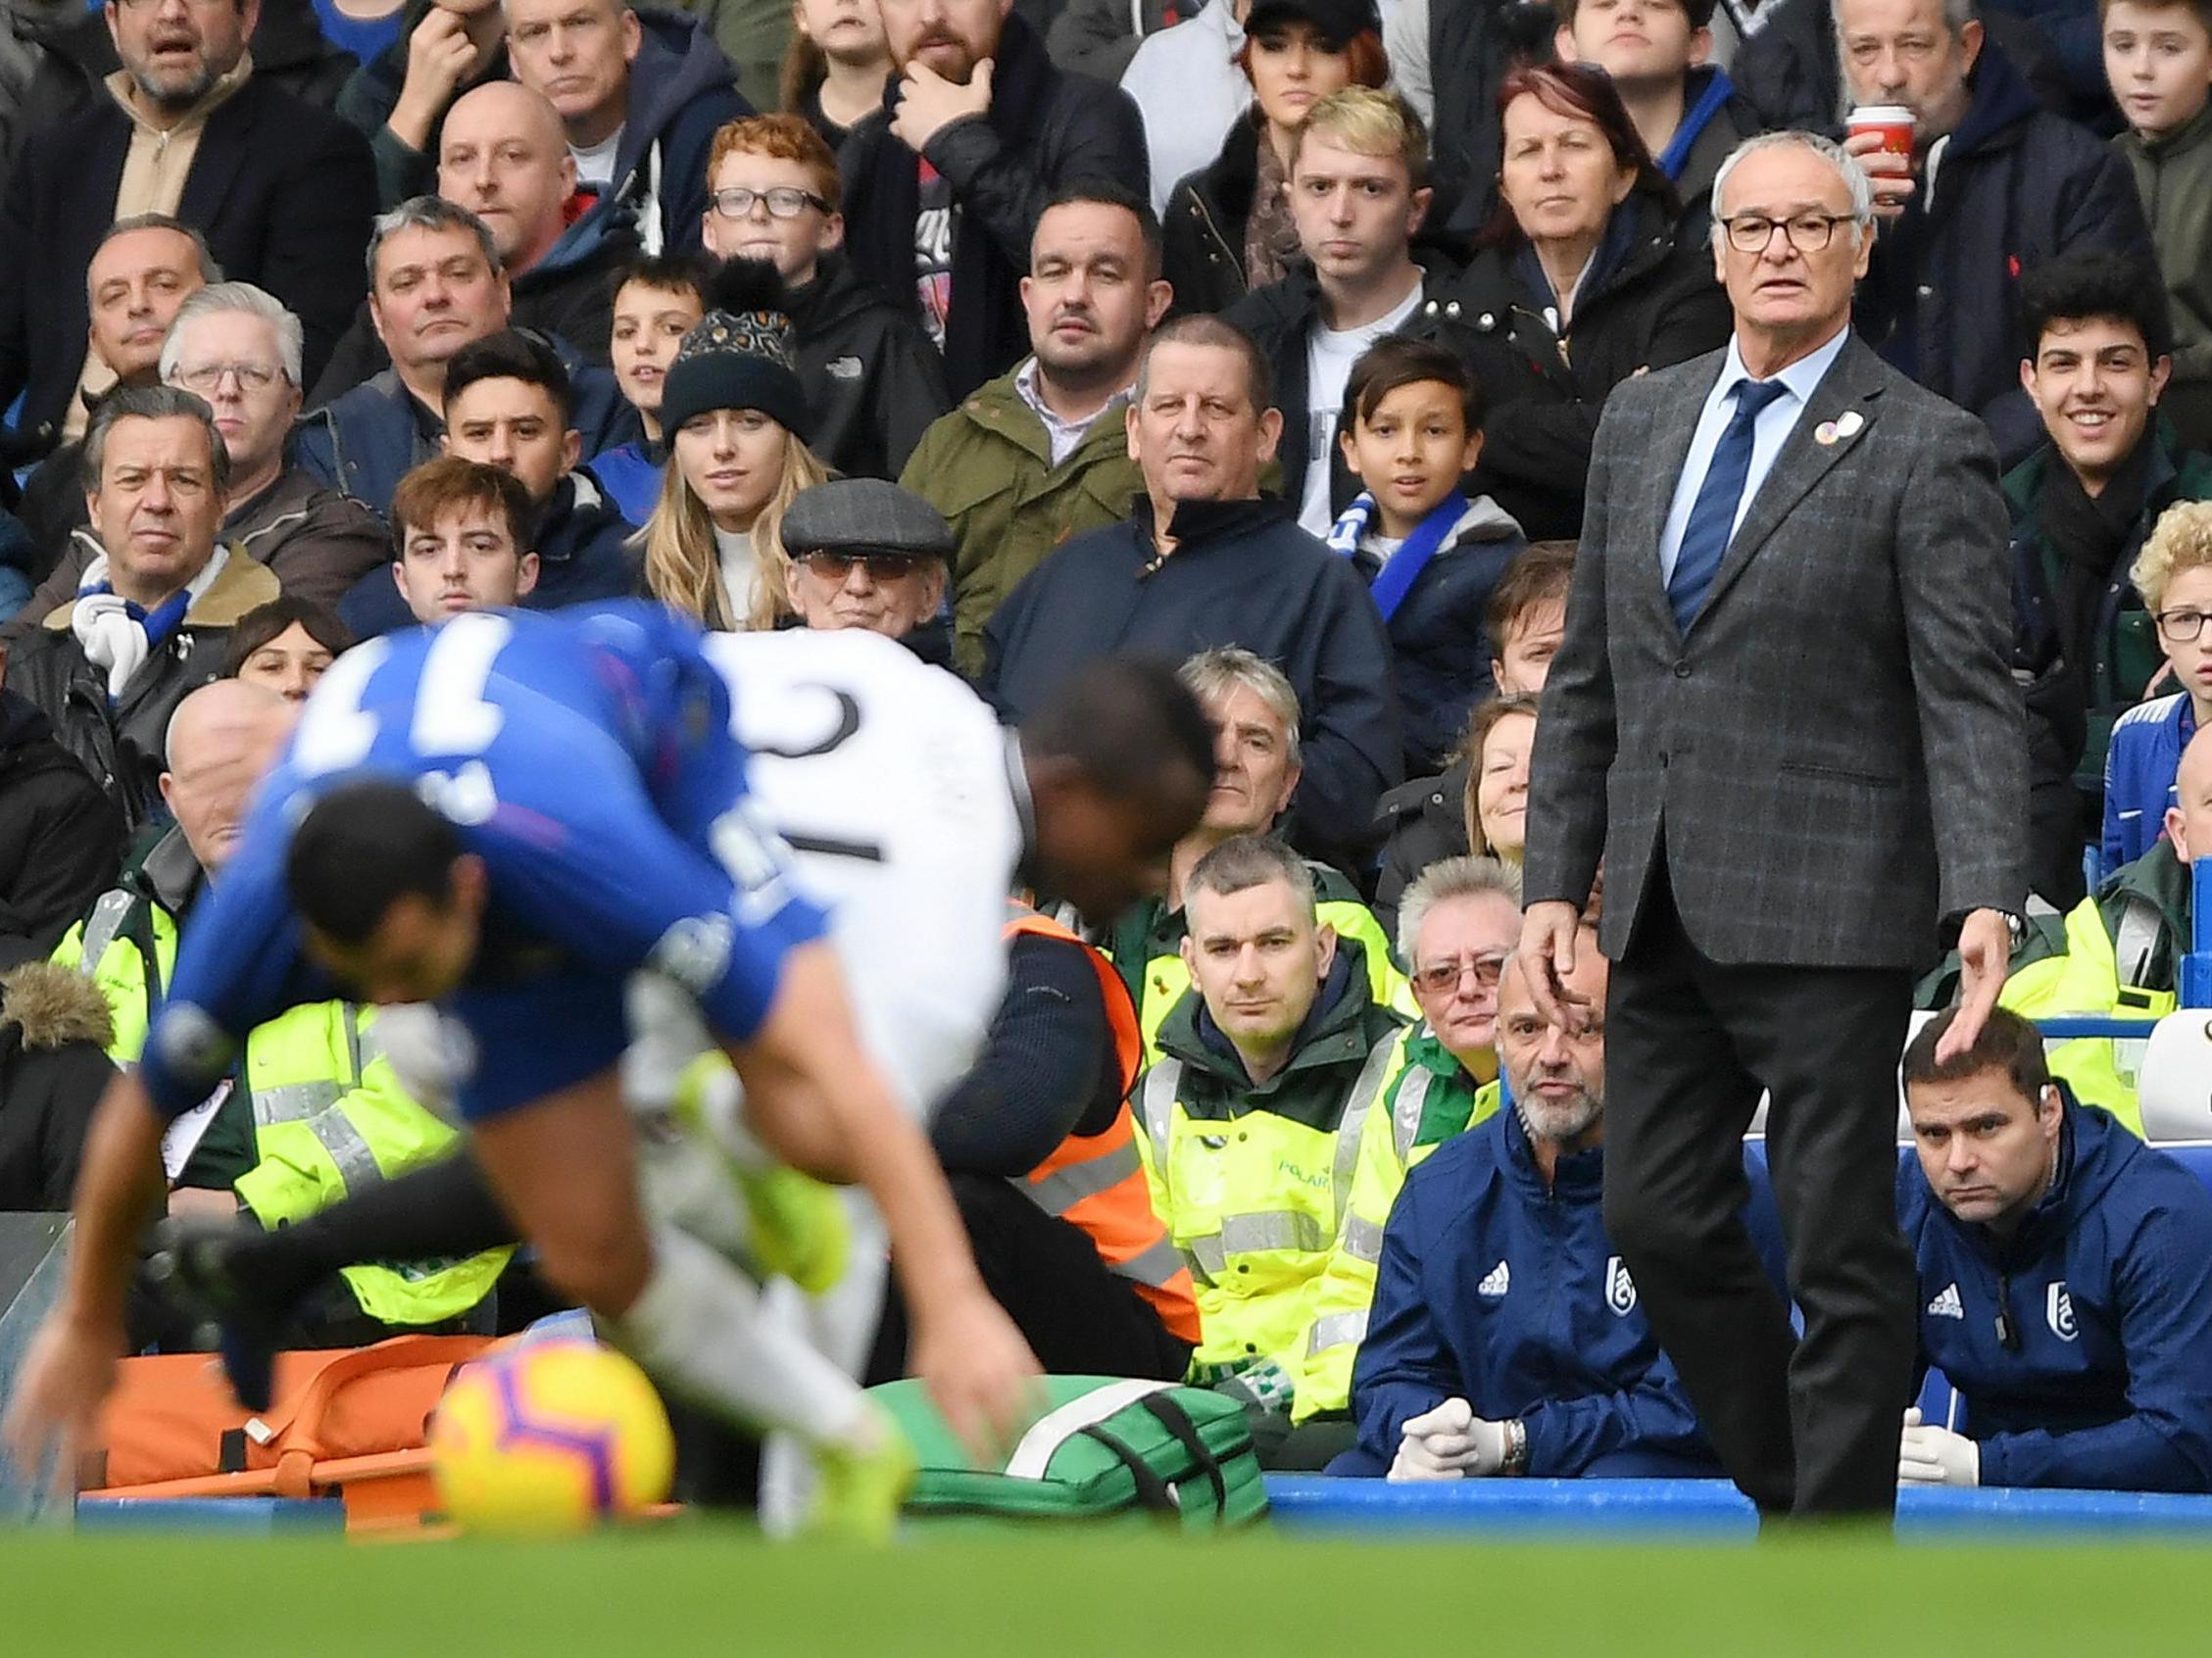 Former Chelsea boss Claudio Ranieri made his return to Stamford Bridge